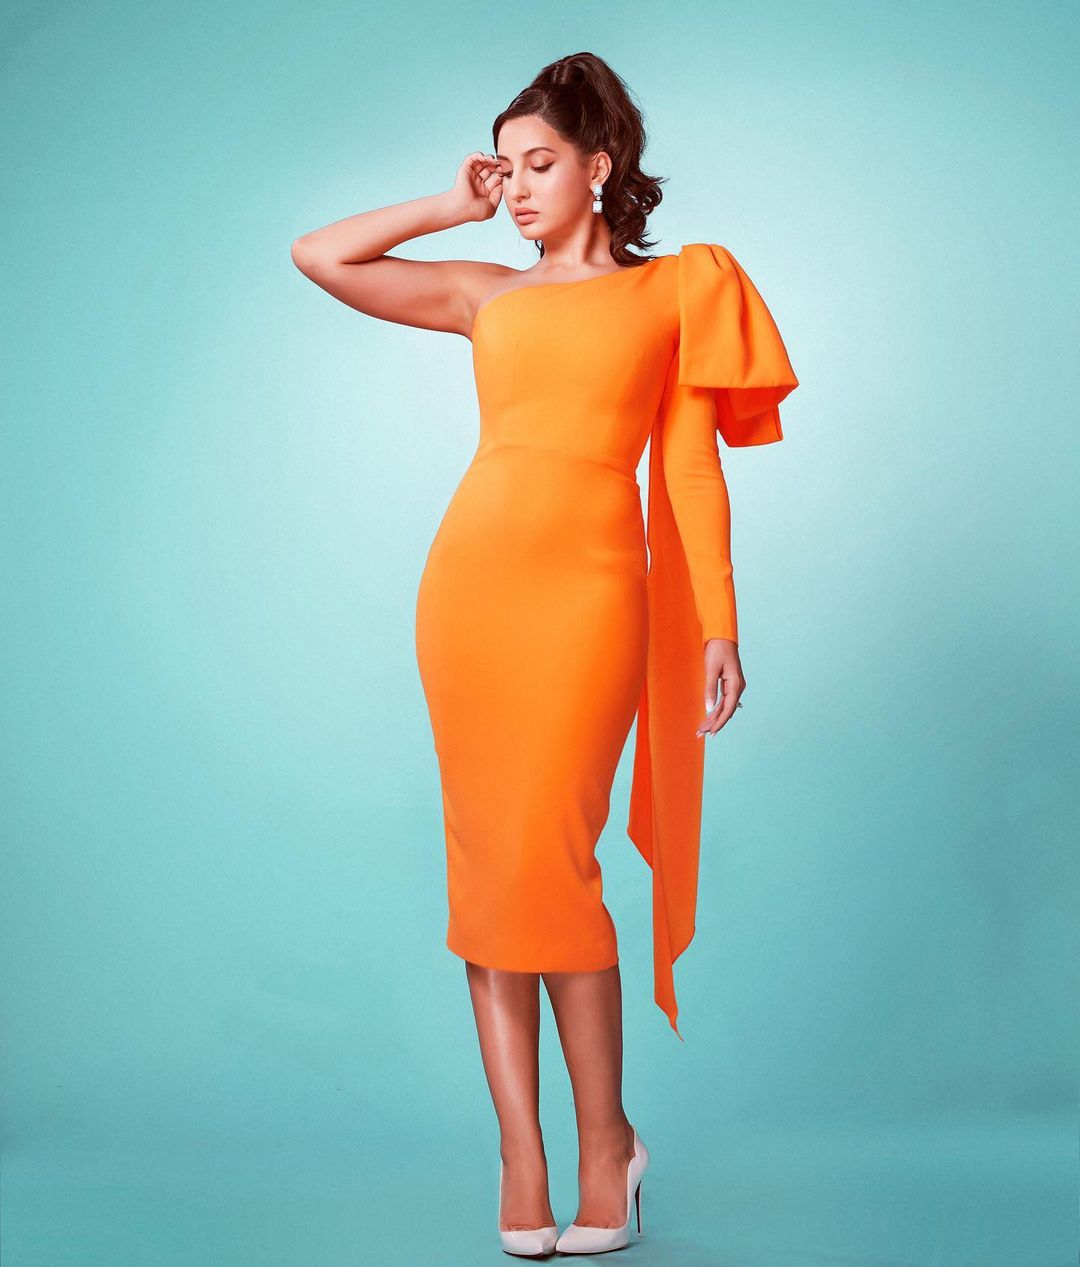 Nora Fatehi looks flawless in the asymmetrical orange dress. 